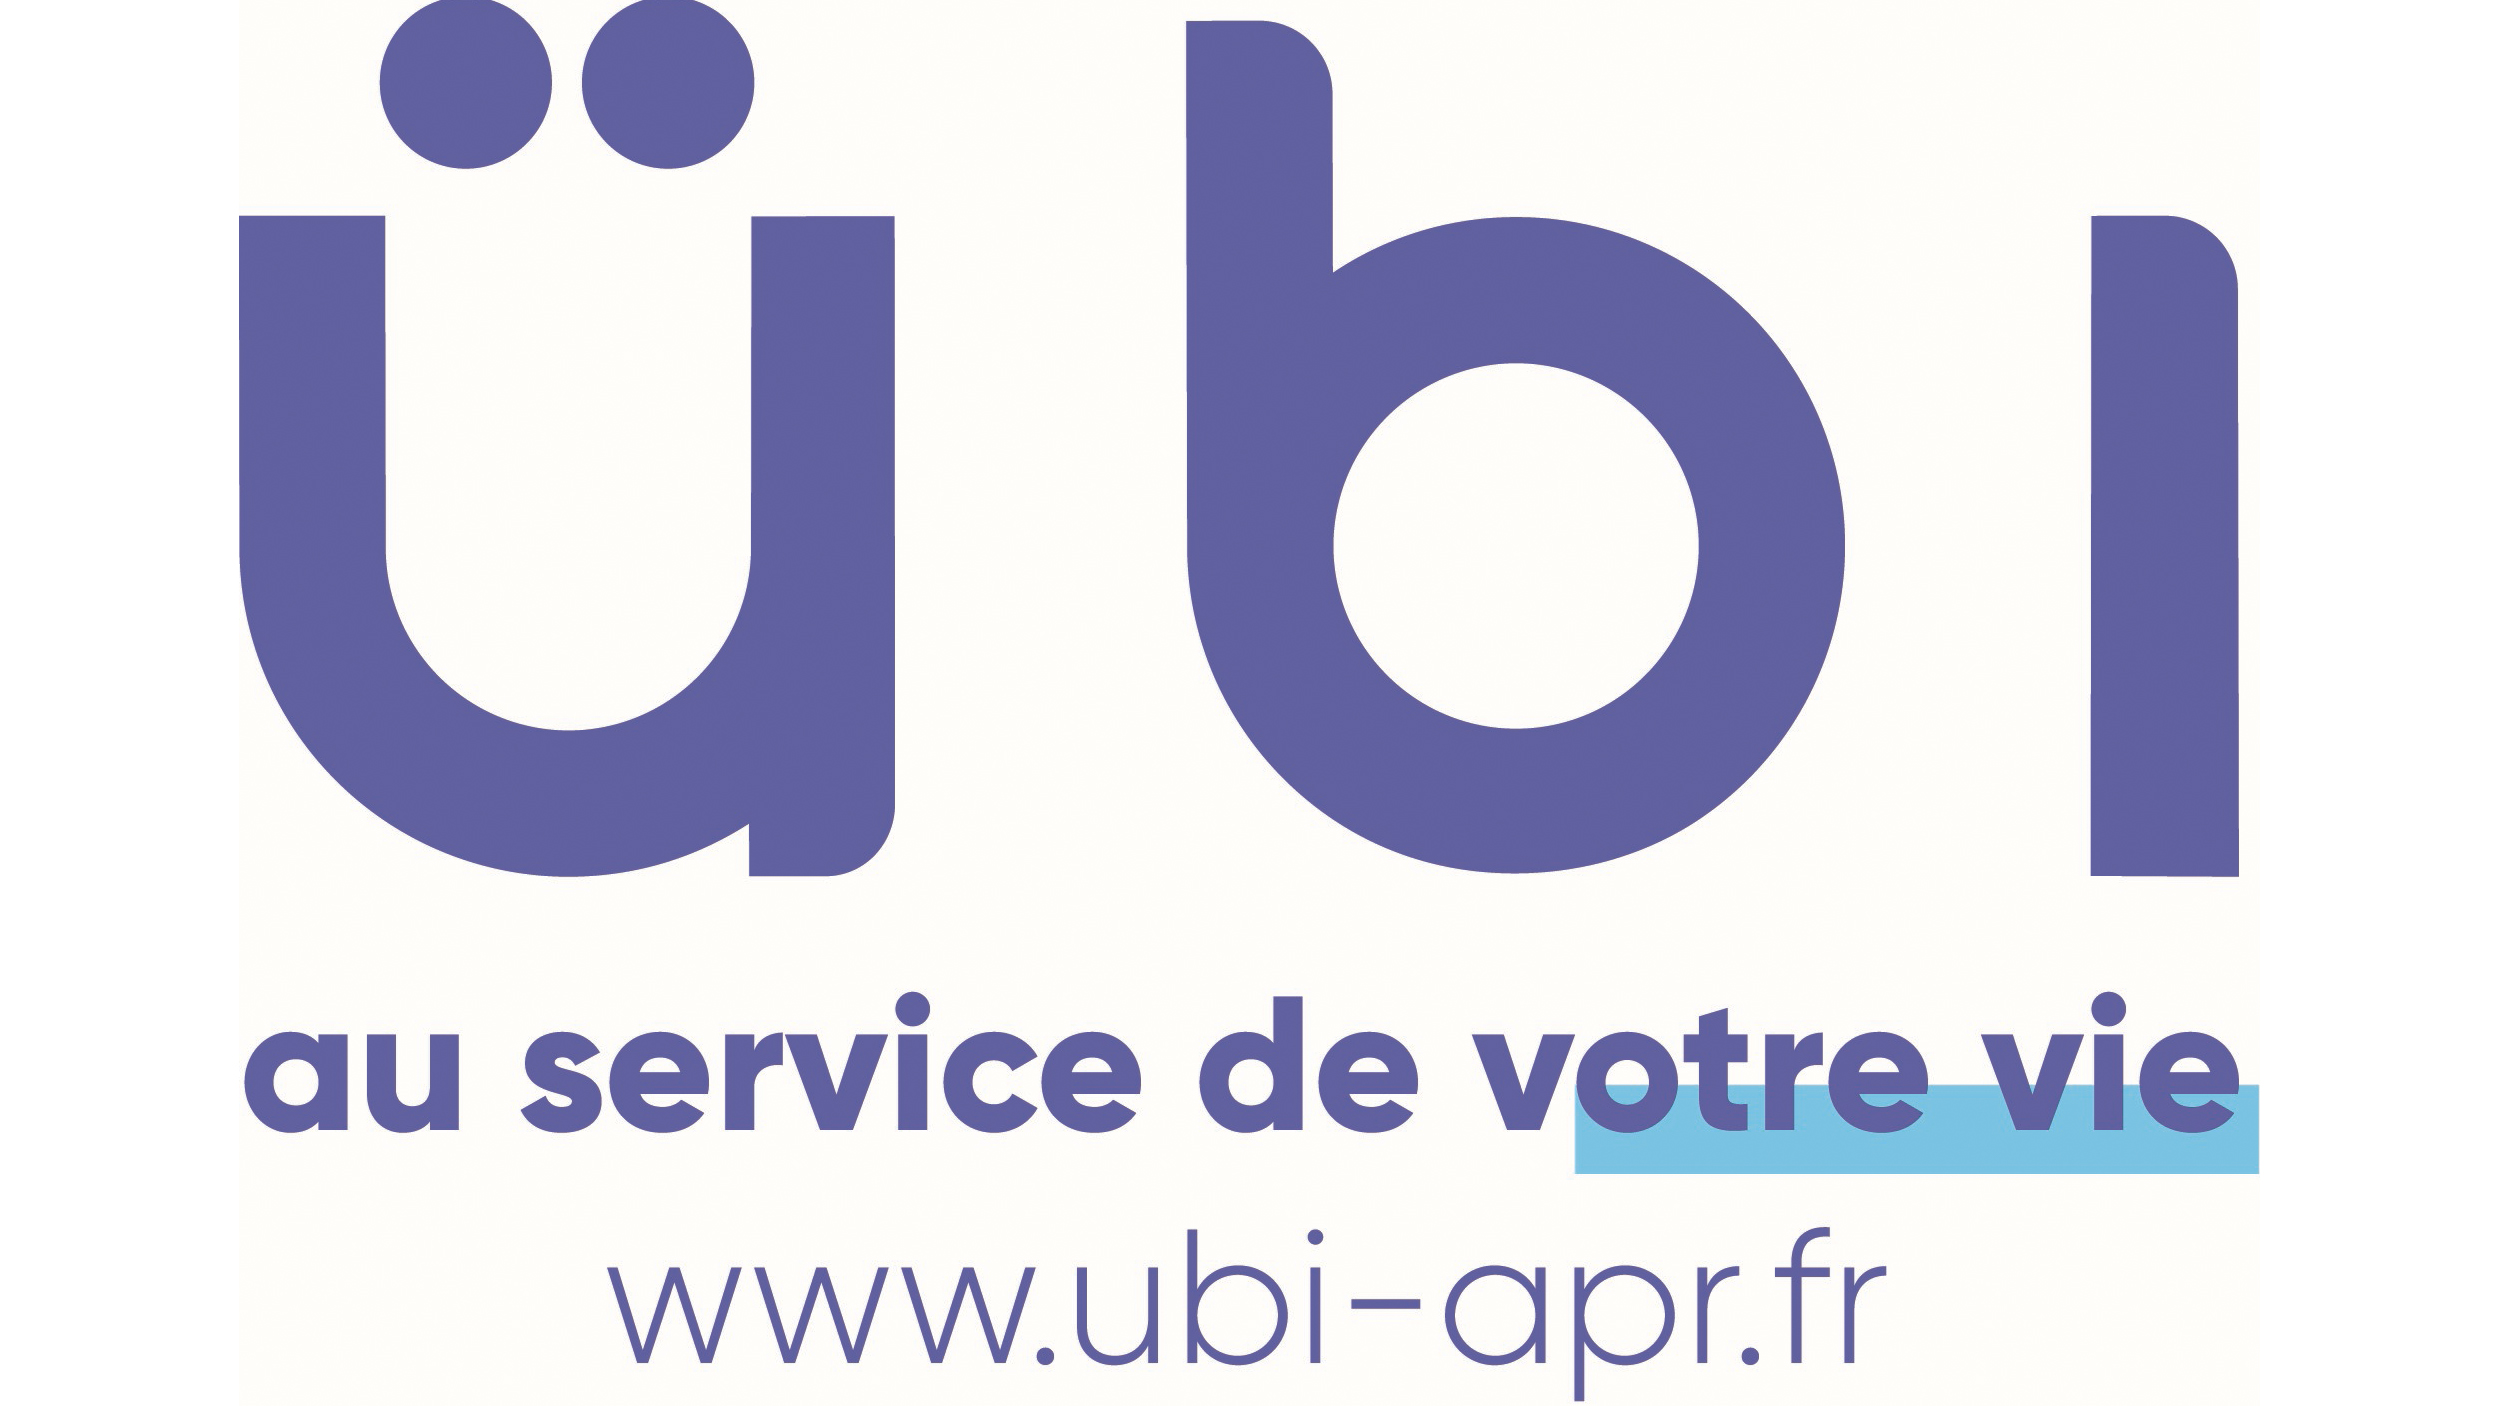 UBI logo news